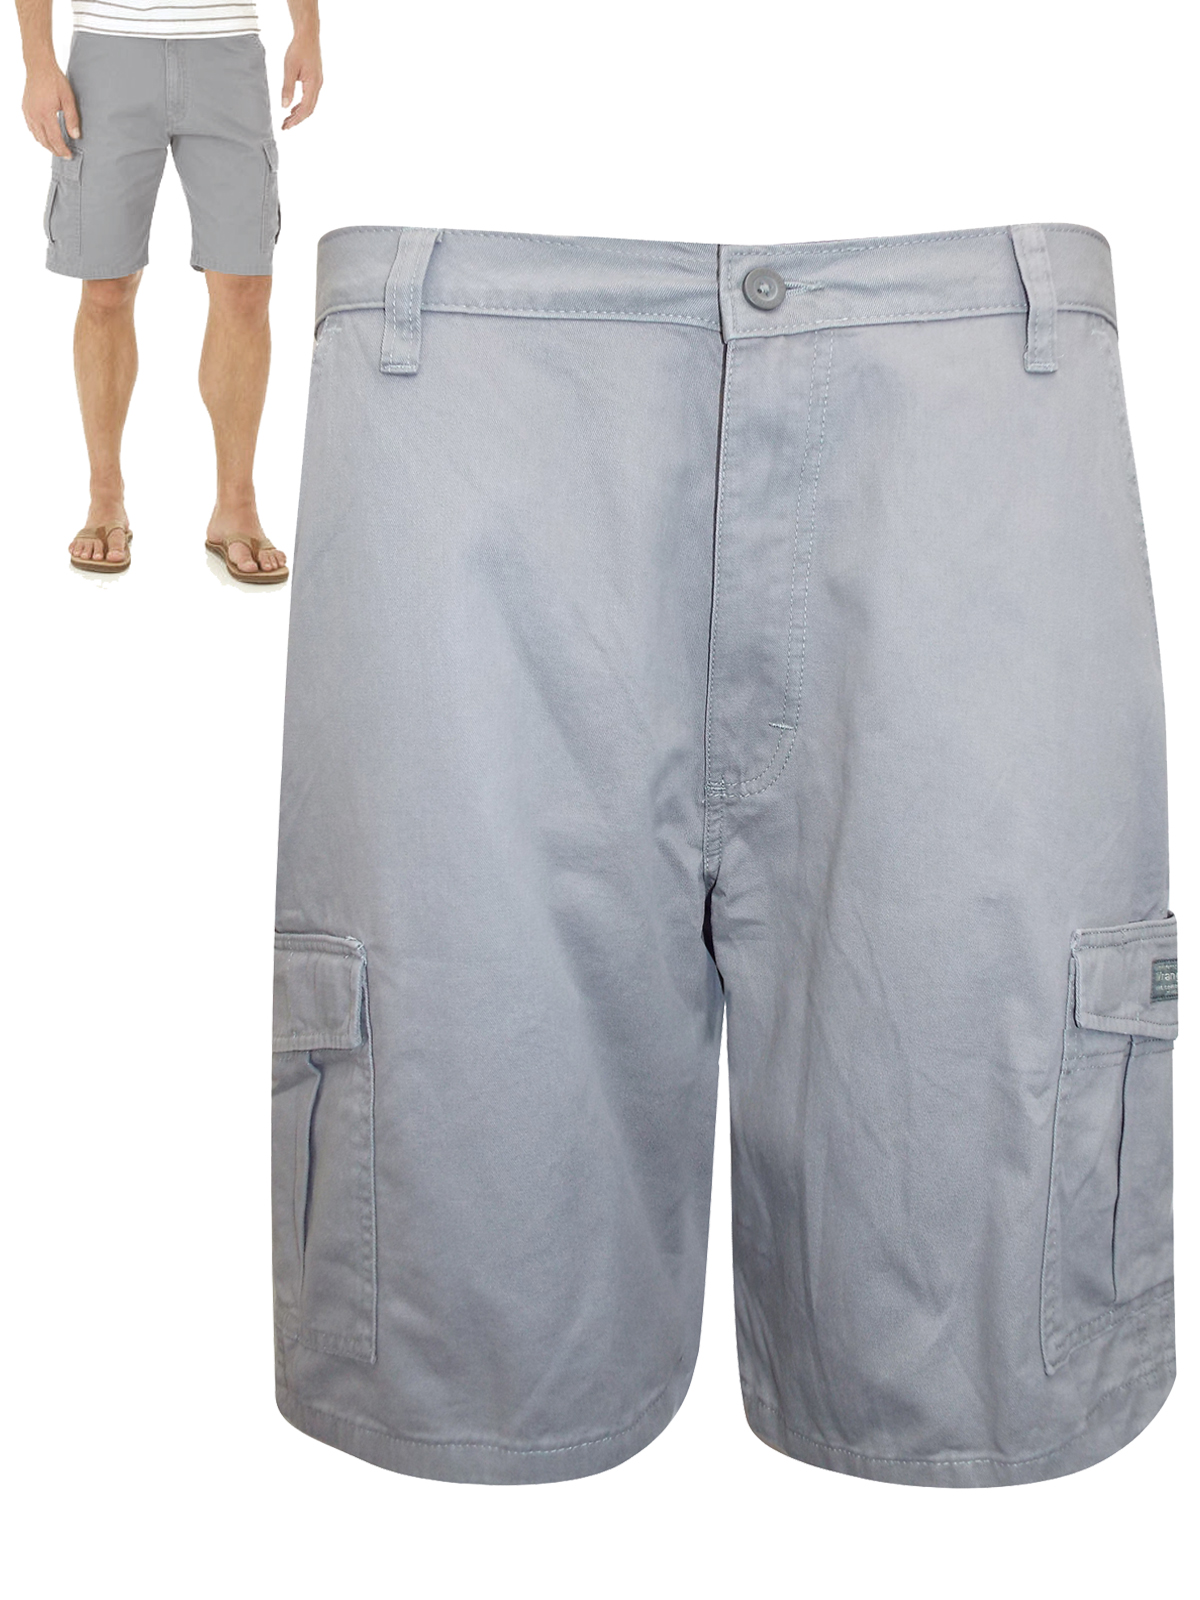 Wrangler - - Wr4ngler GREY Pure Cotton Cargo Shorts - Waist Size 34 to 44